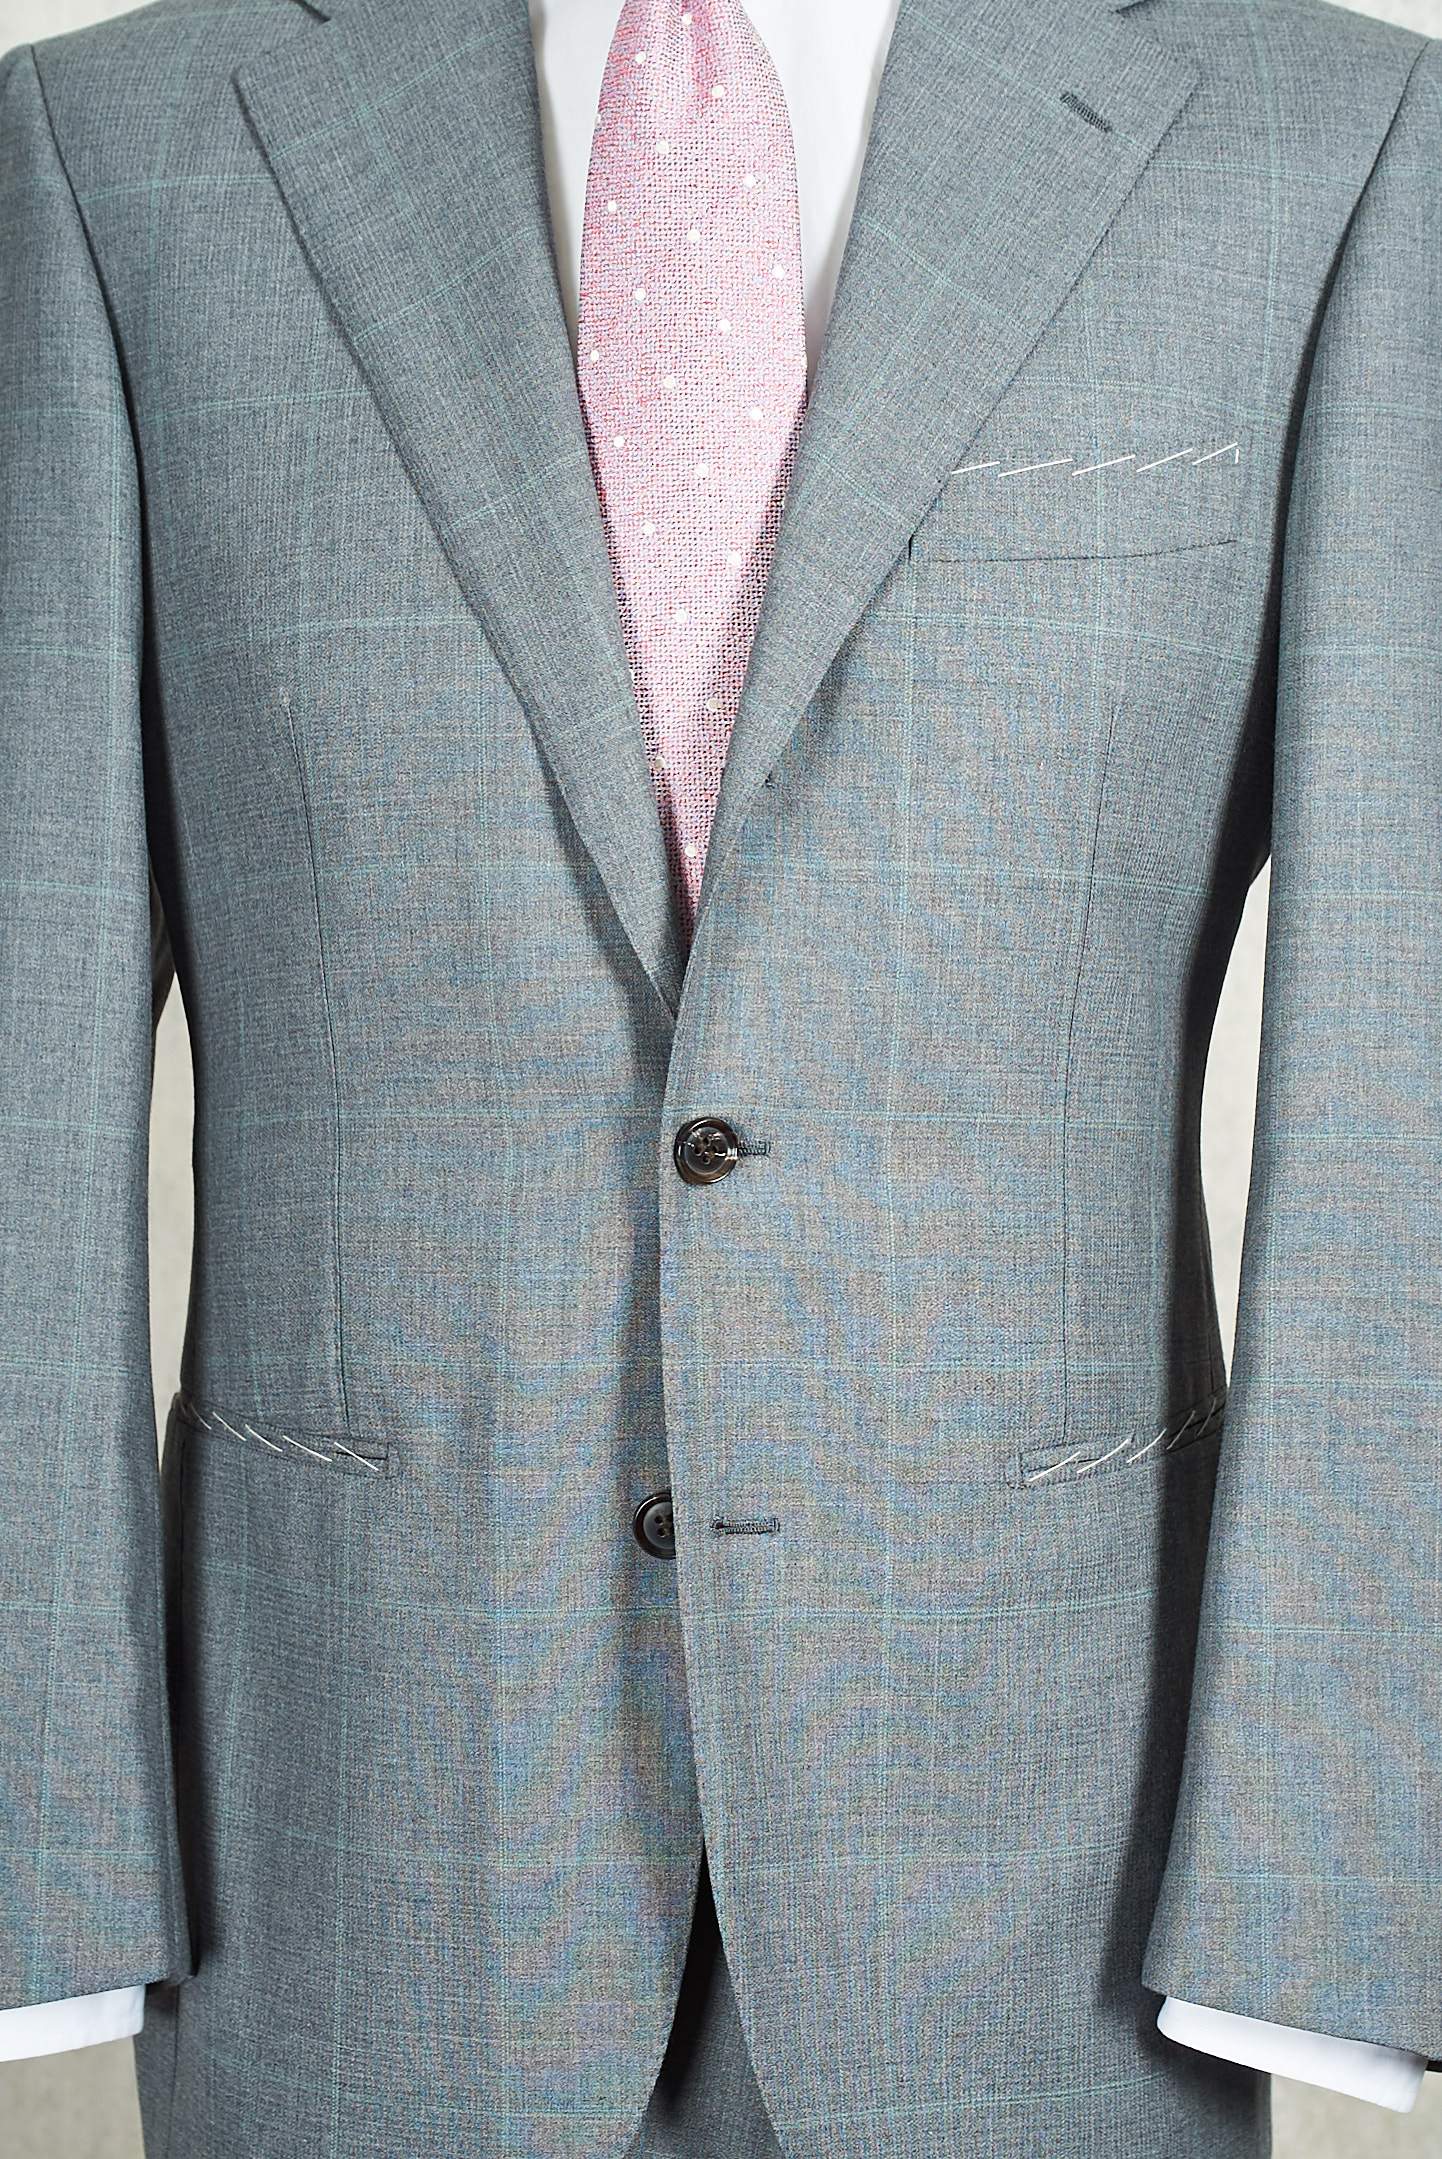 Ring Jacket AMJ01 Grey Windowpane Wool Suit